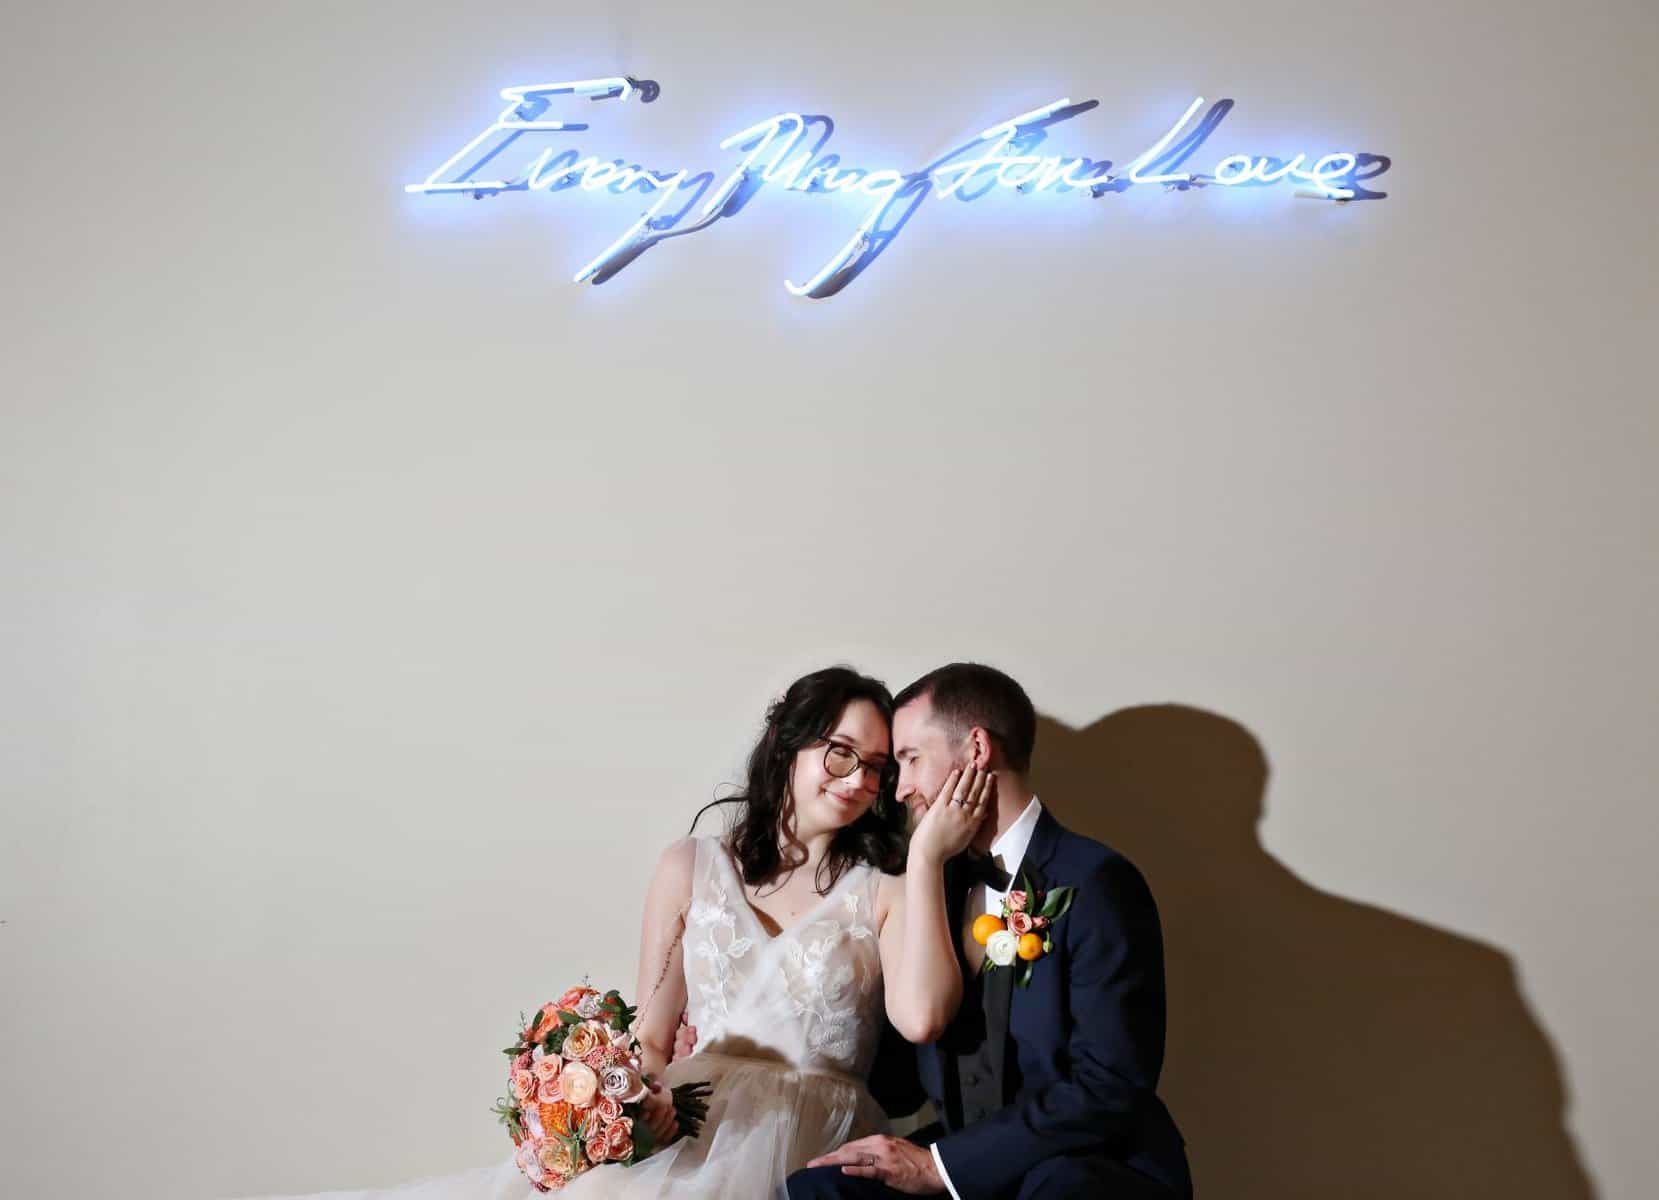 Florida Wedding - Just Marry Weddings - Regina Hyman Photography - Portraits